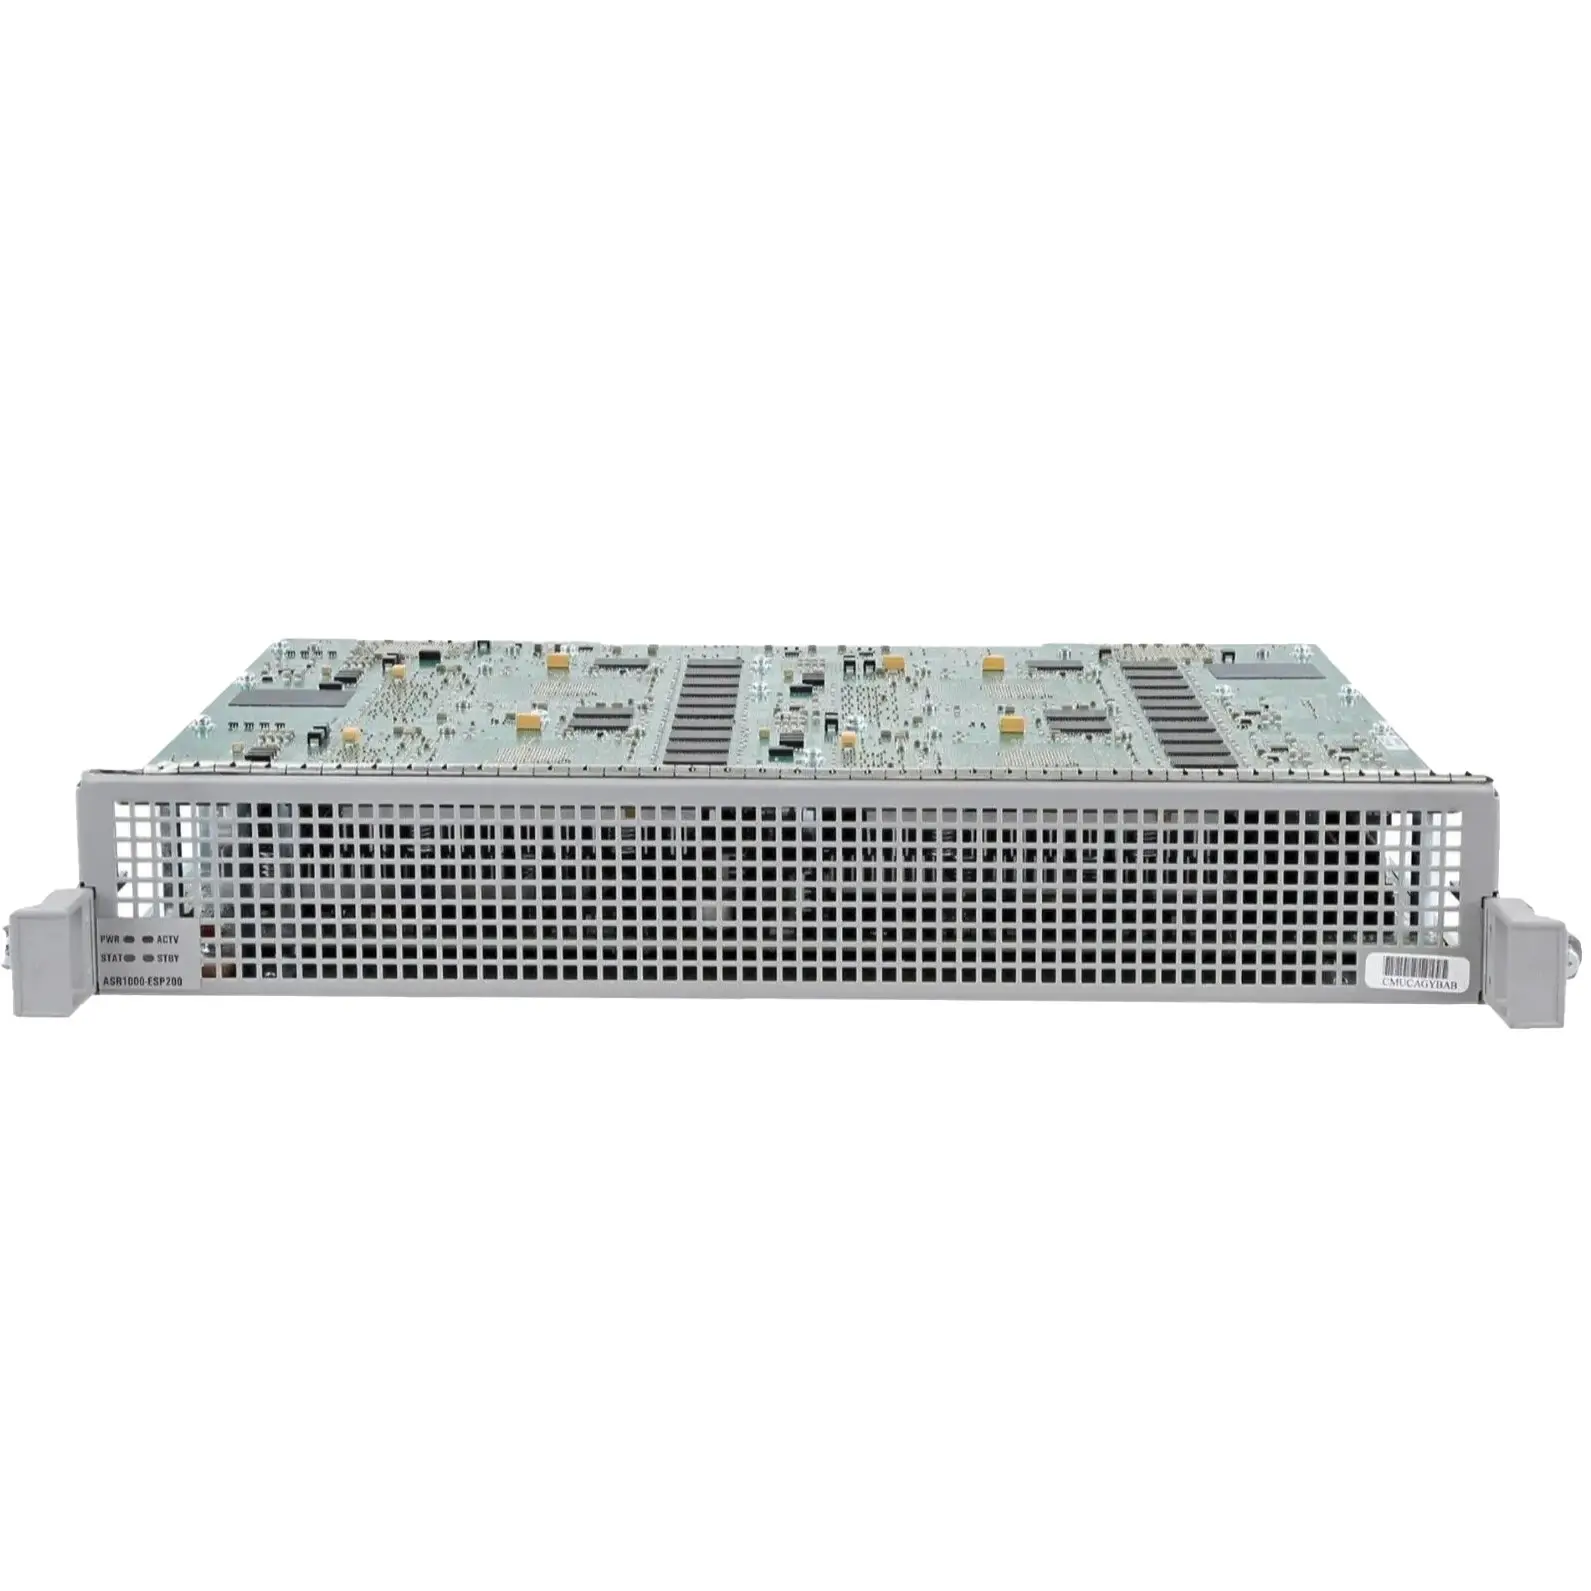 Original ASR1000-ESP200 Router ASR 1000 Series Embedded Services Processor ASR 1000 Router Module